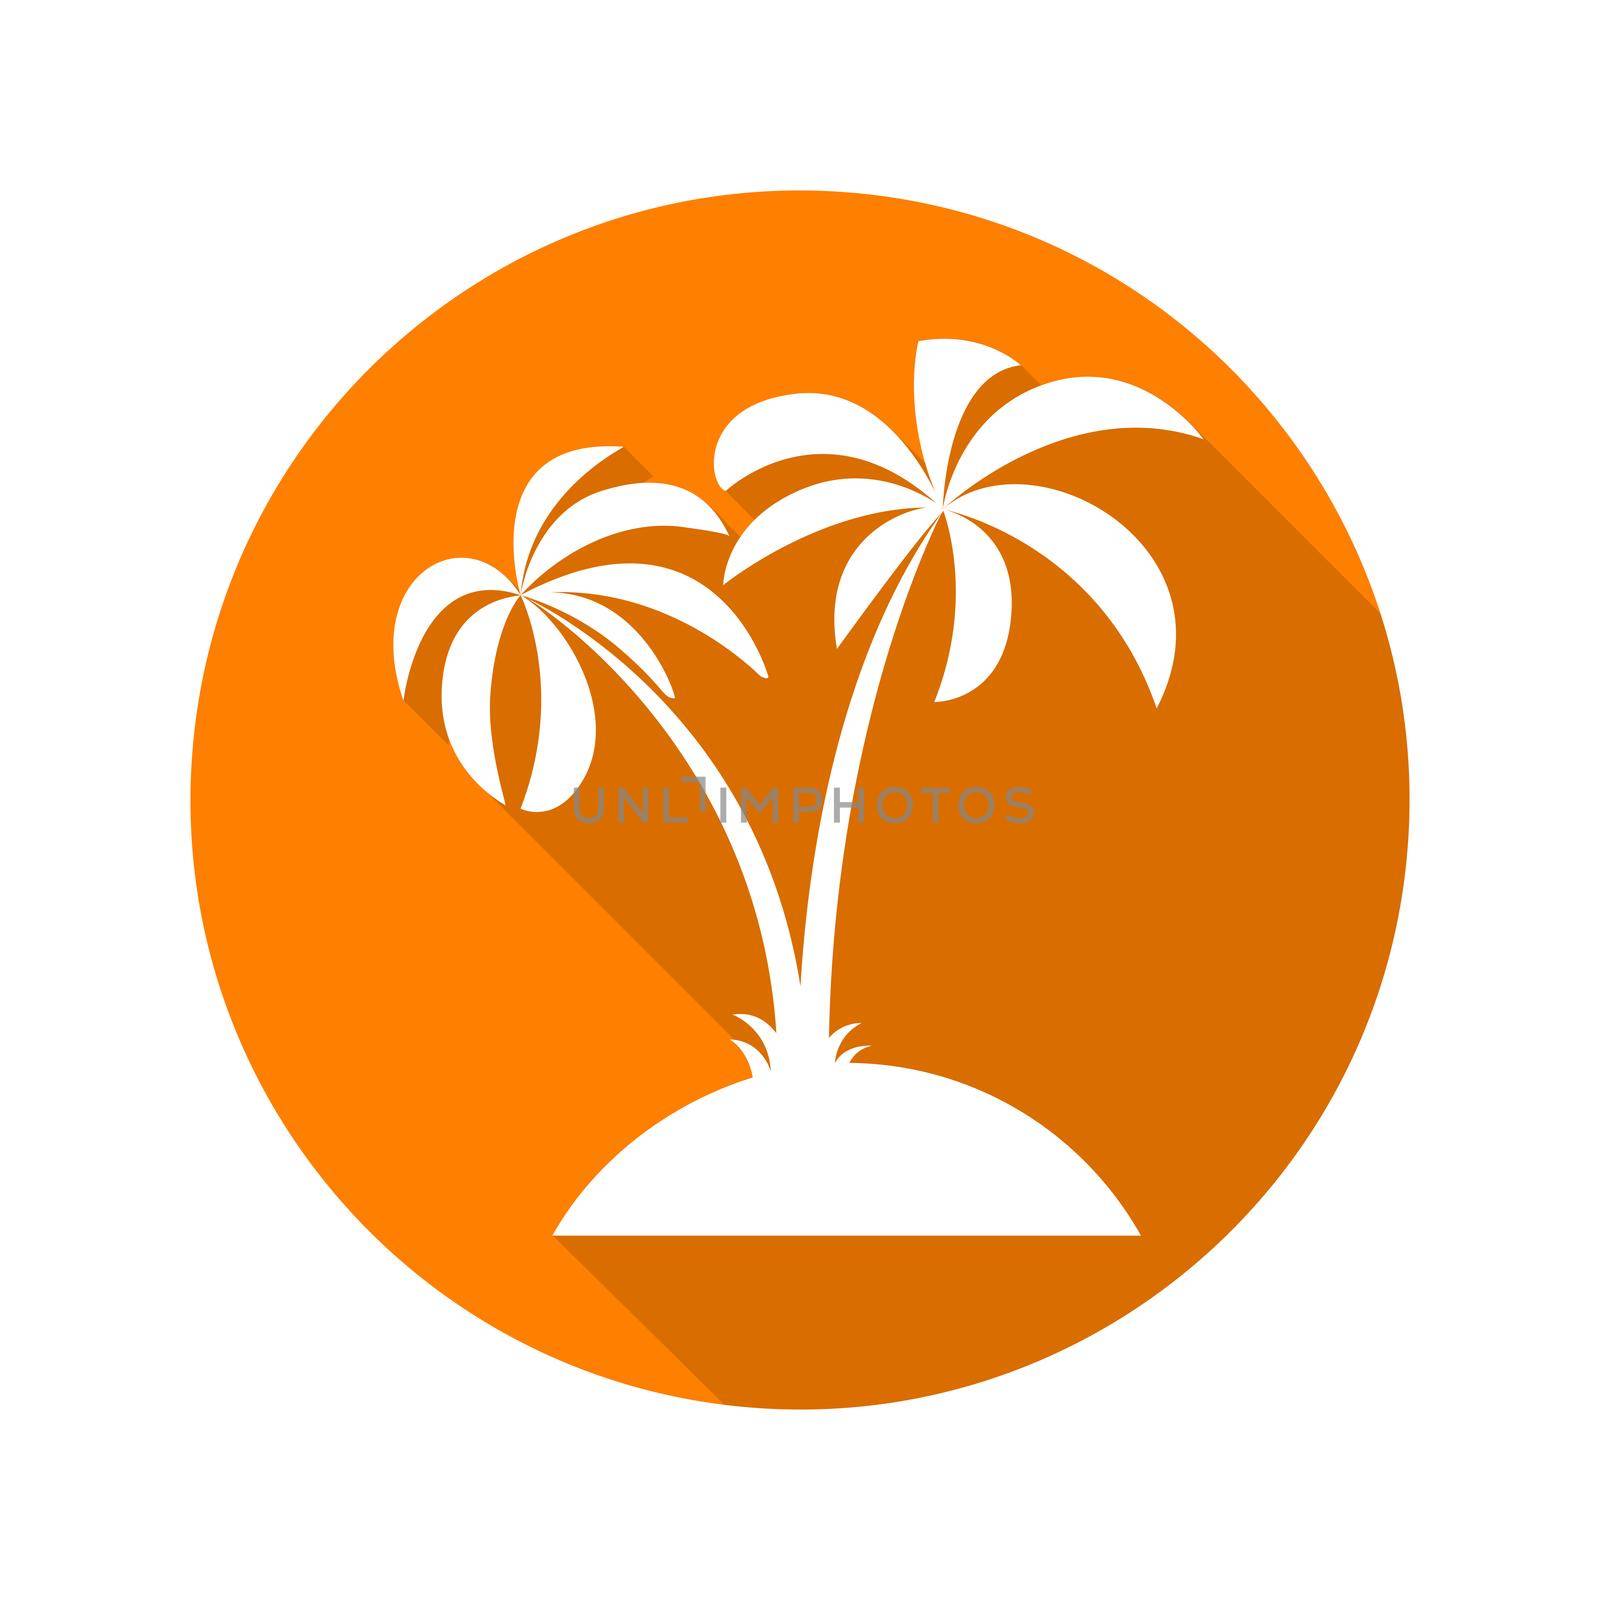 Palm tree. Flat icon with long shadow on orange round background. Flat design style. illustration. .